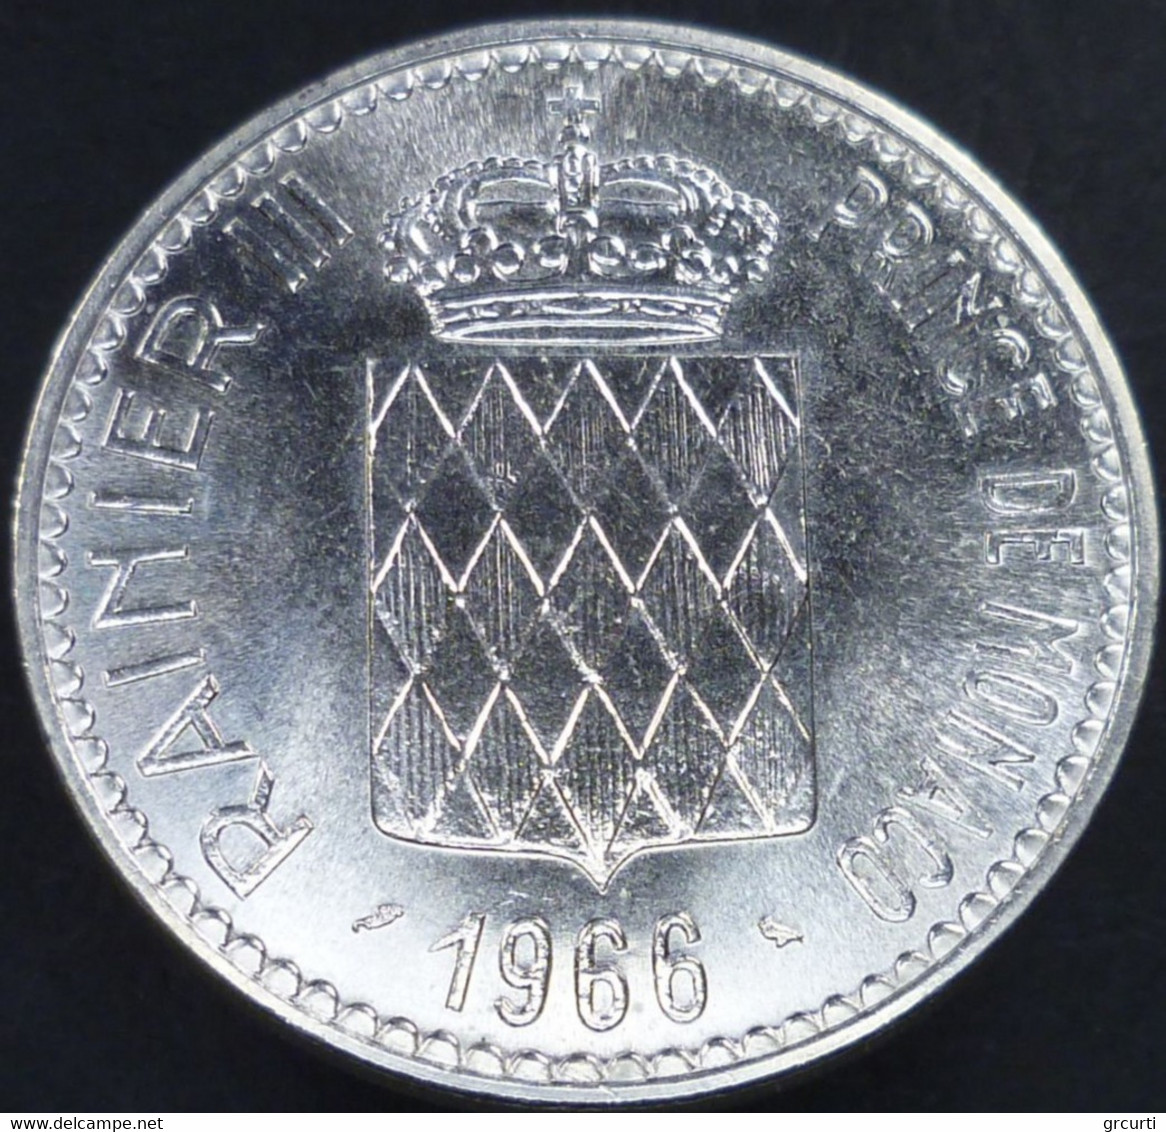 Monaco - 10 Francs 1966 -100° Adesione Principe Carlo III - KM# 146 - 1960-2001 Nouveaux Francs